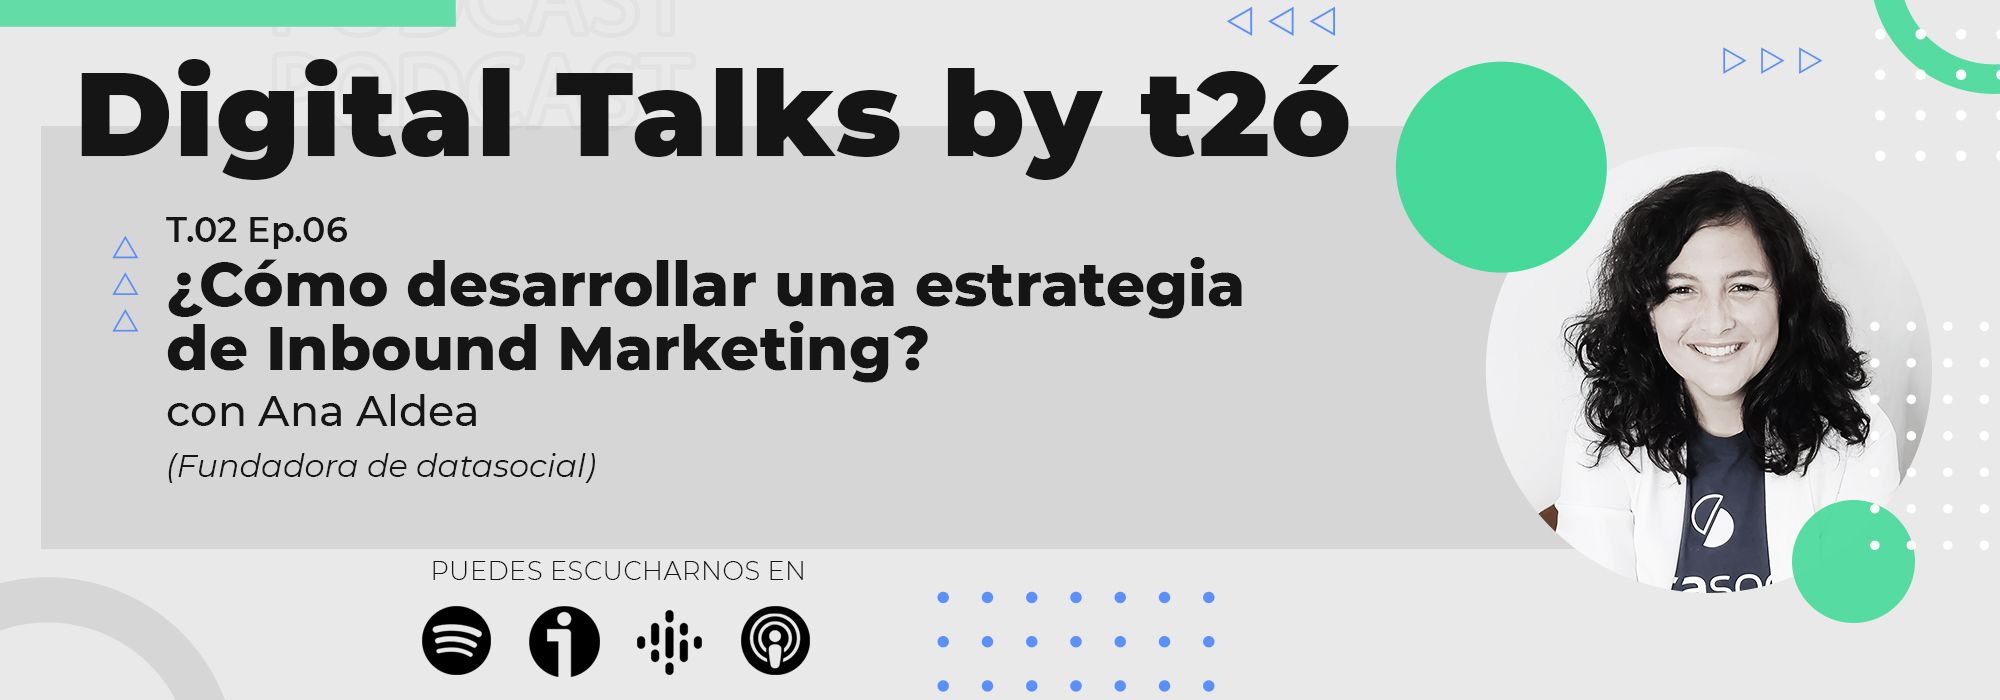 Digtal Talks by t2ó: Inbound Marketing